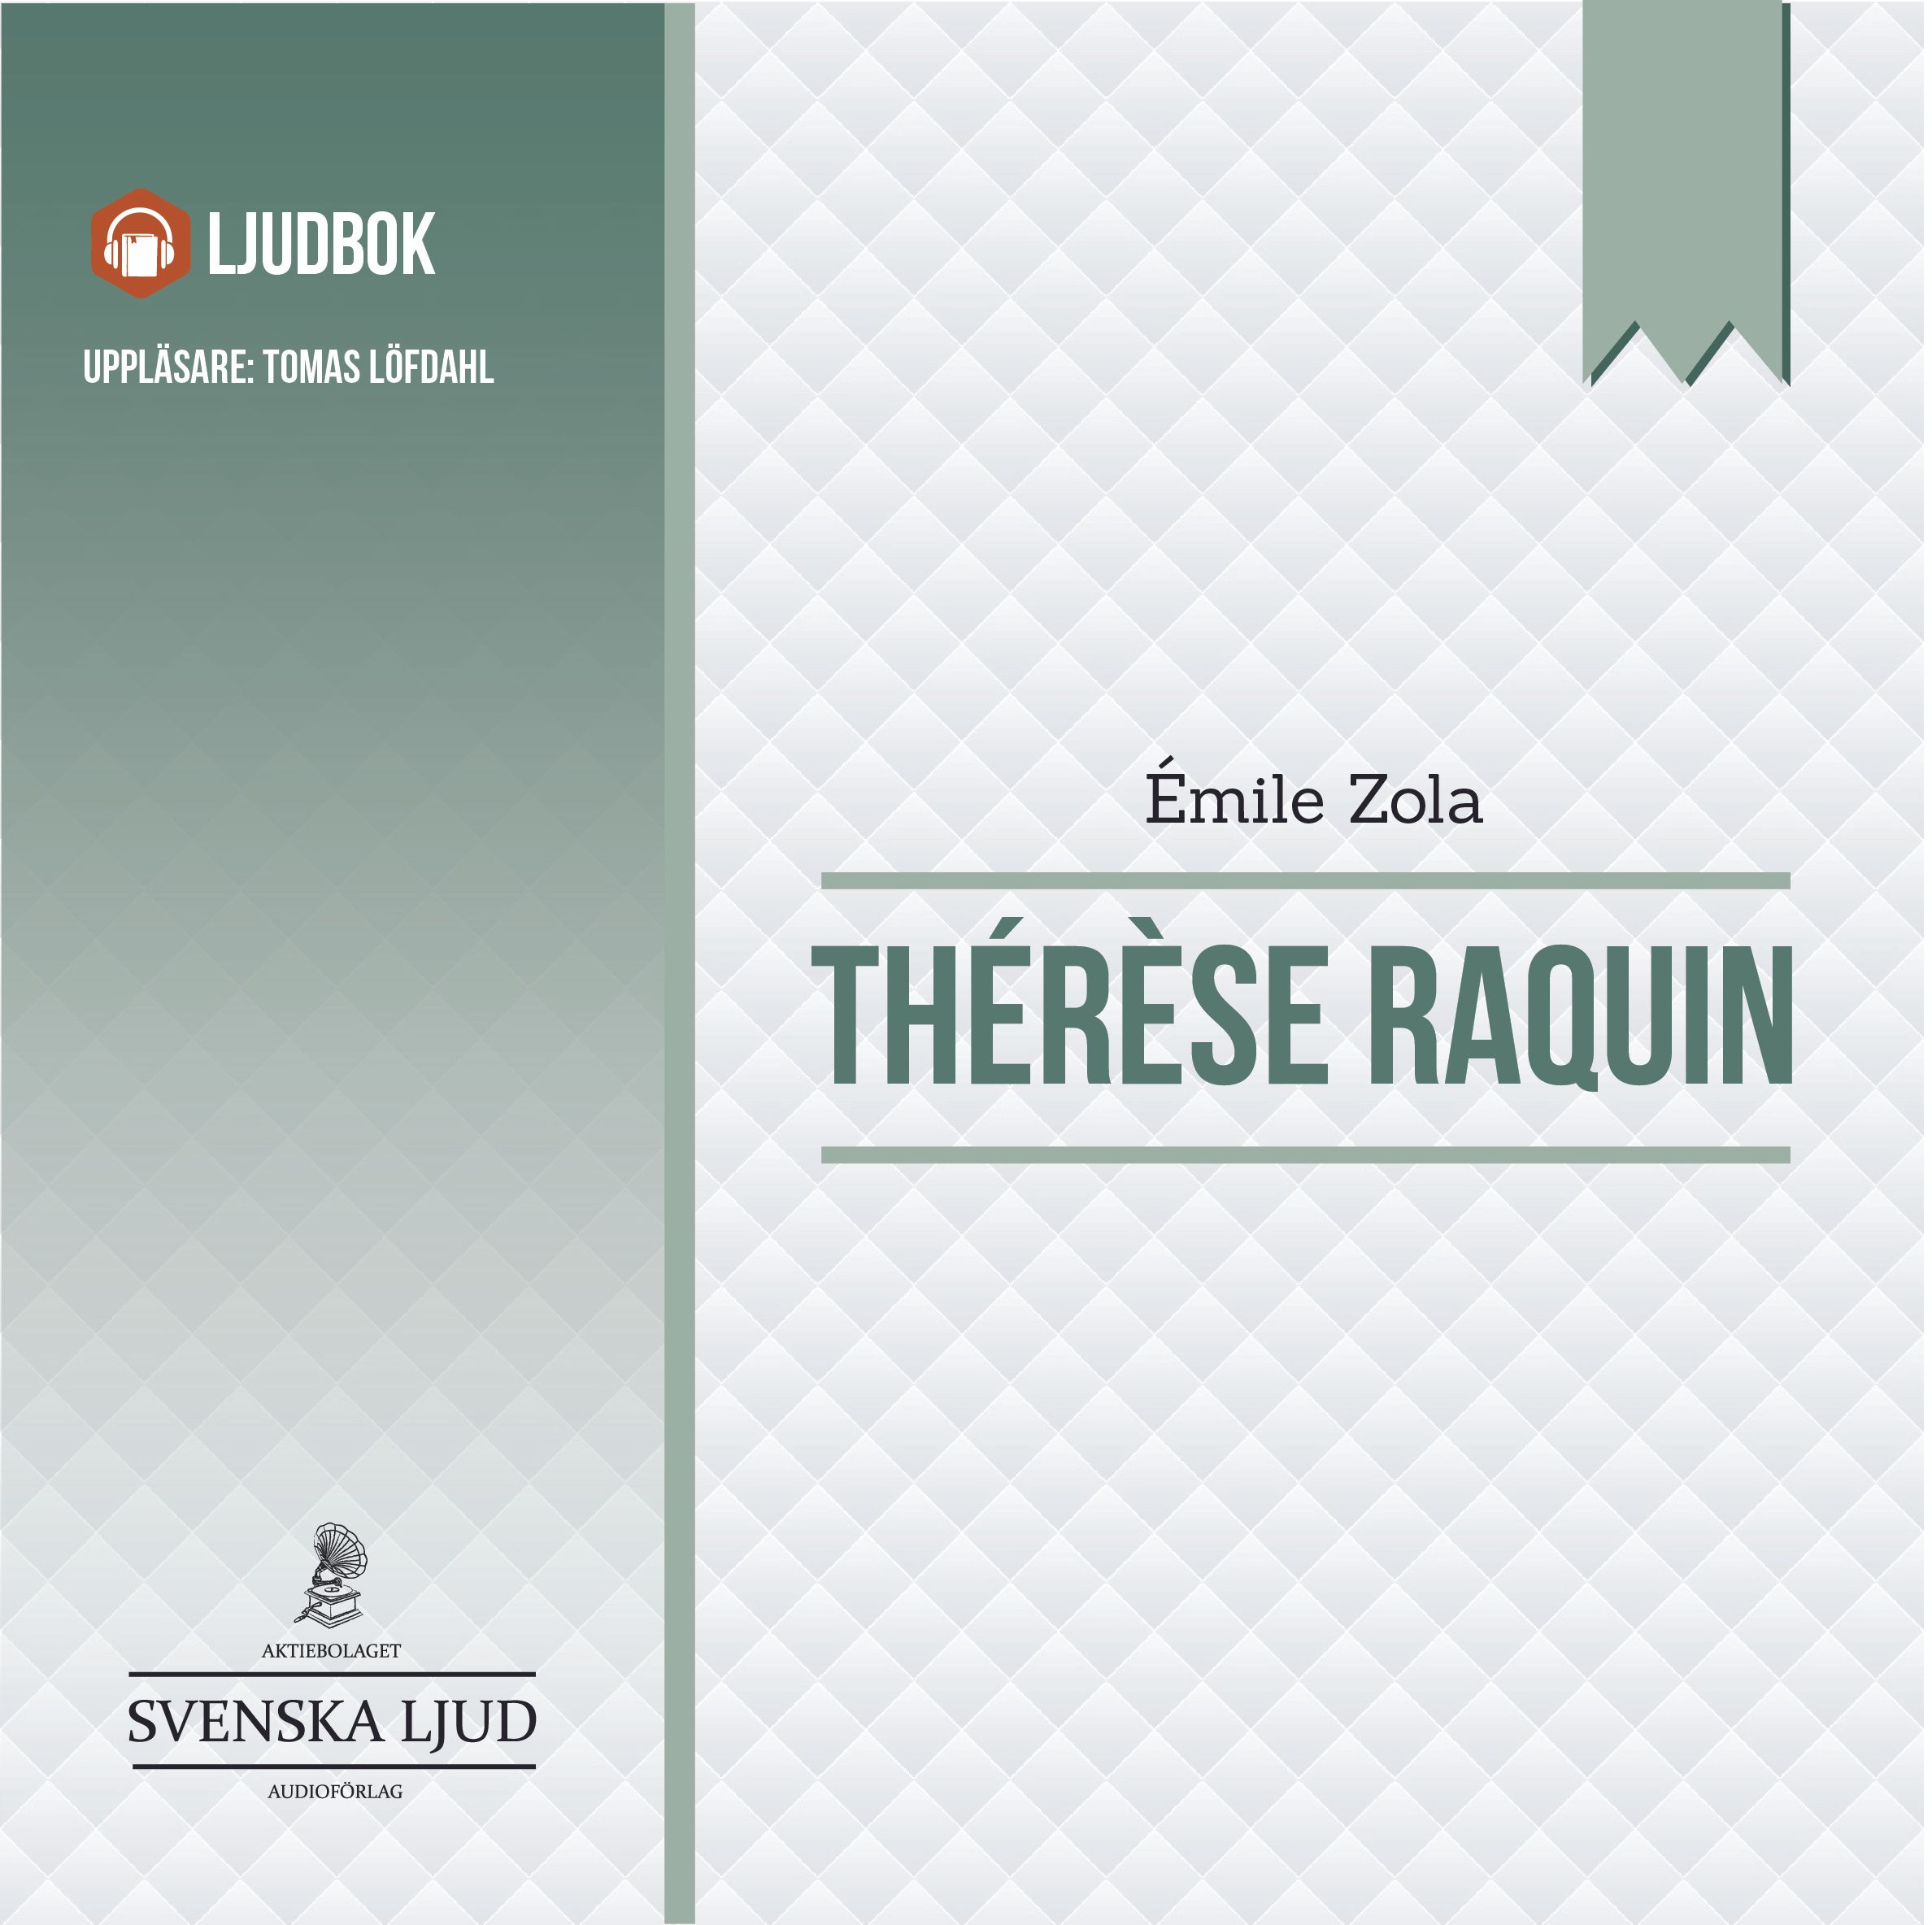 Therese Raquin, ljudbok av Emile Zola